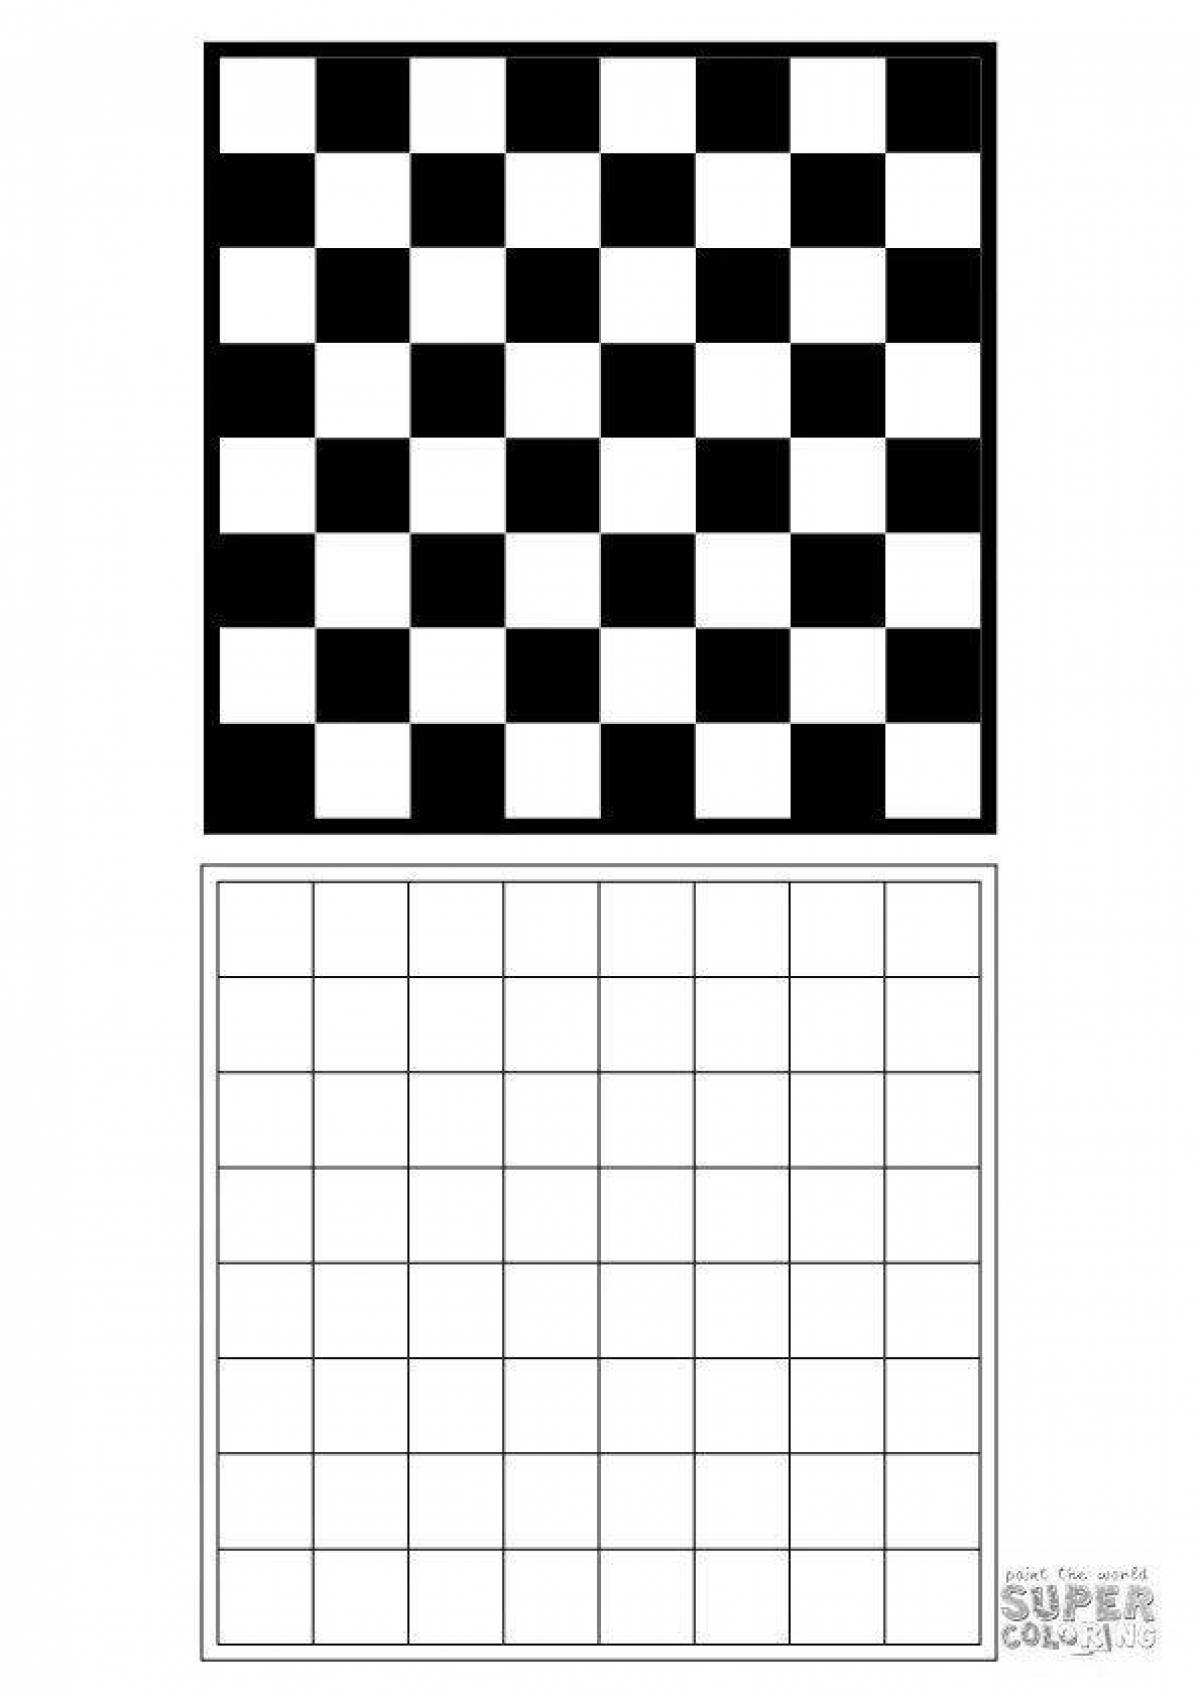 Шахматная доска для распечатки